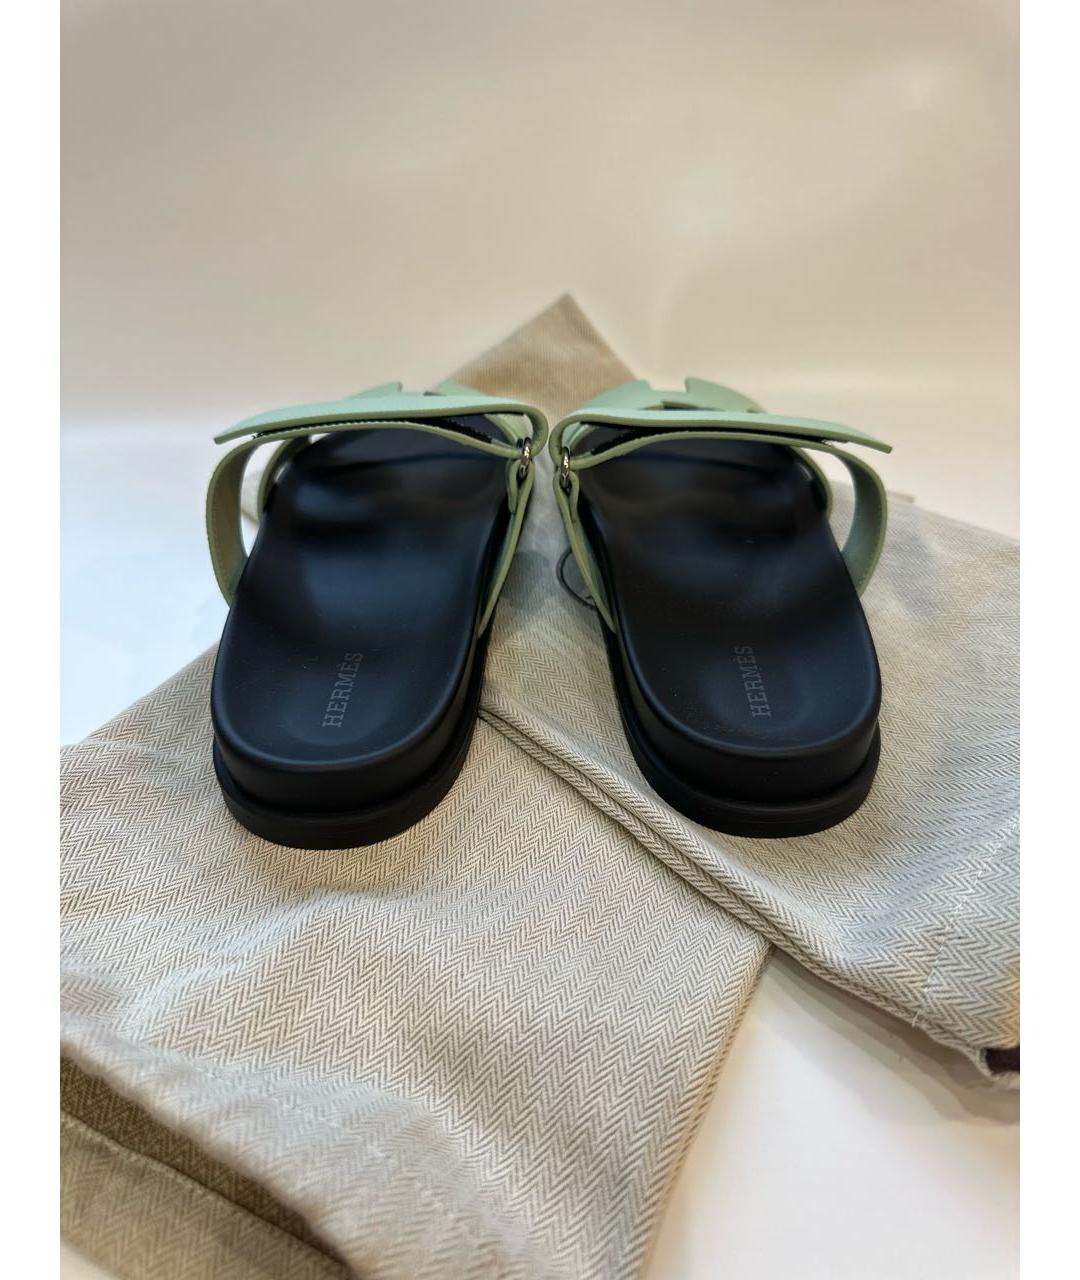 HERMES PRE-OWNED Салатовые кожаные сандалии, фото 4